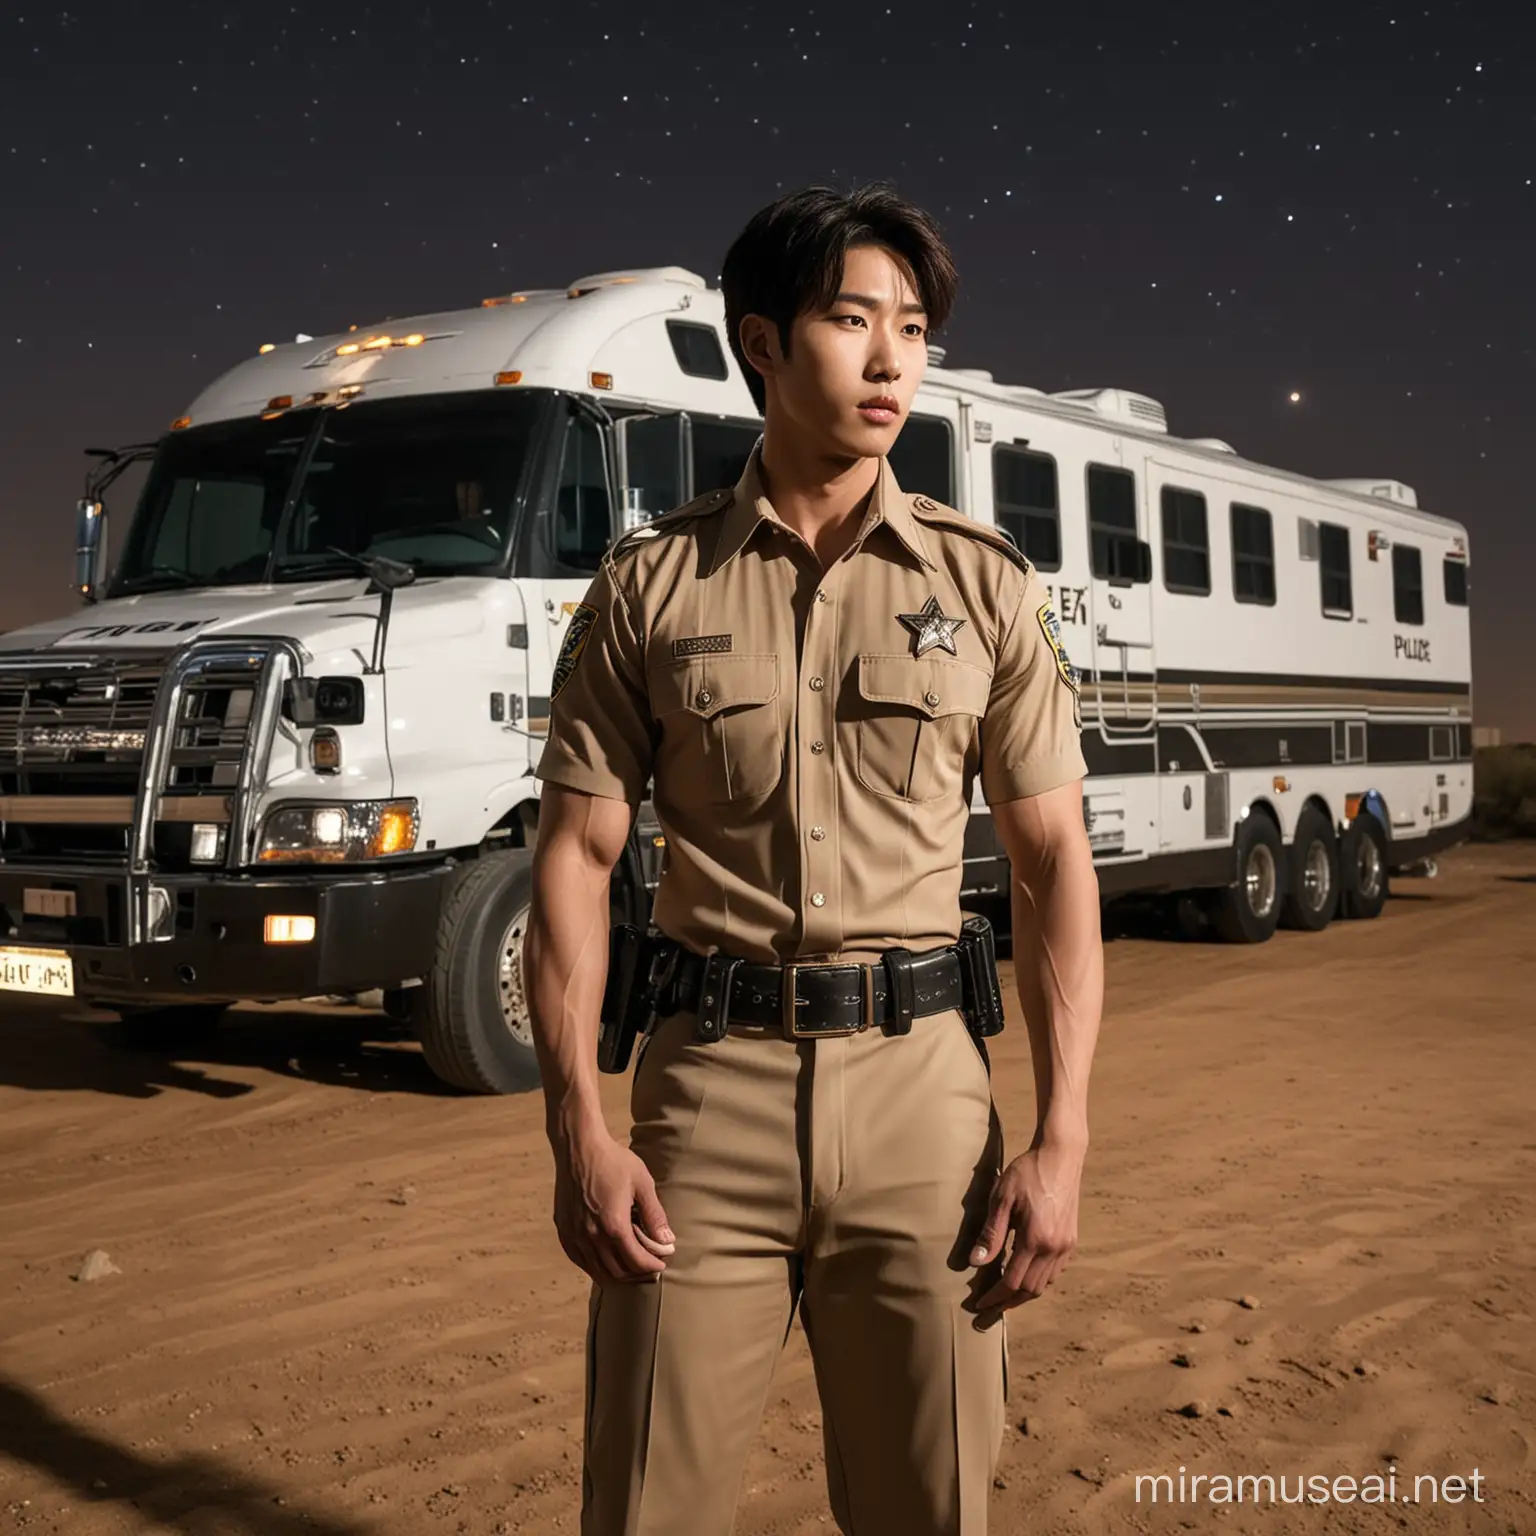 Muscular Korean Sheriff Boy with Police Motor Home in Desert Night Scene